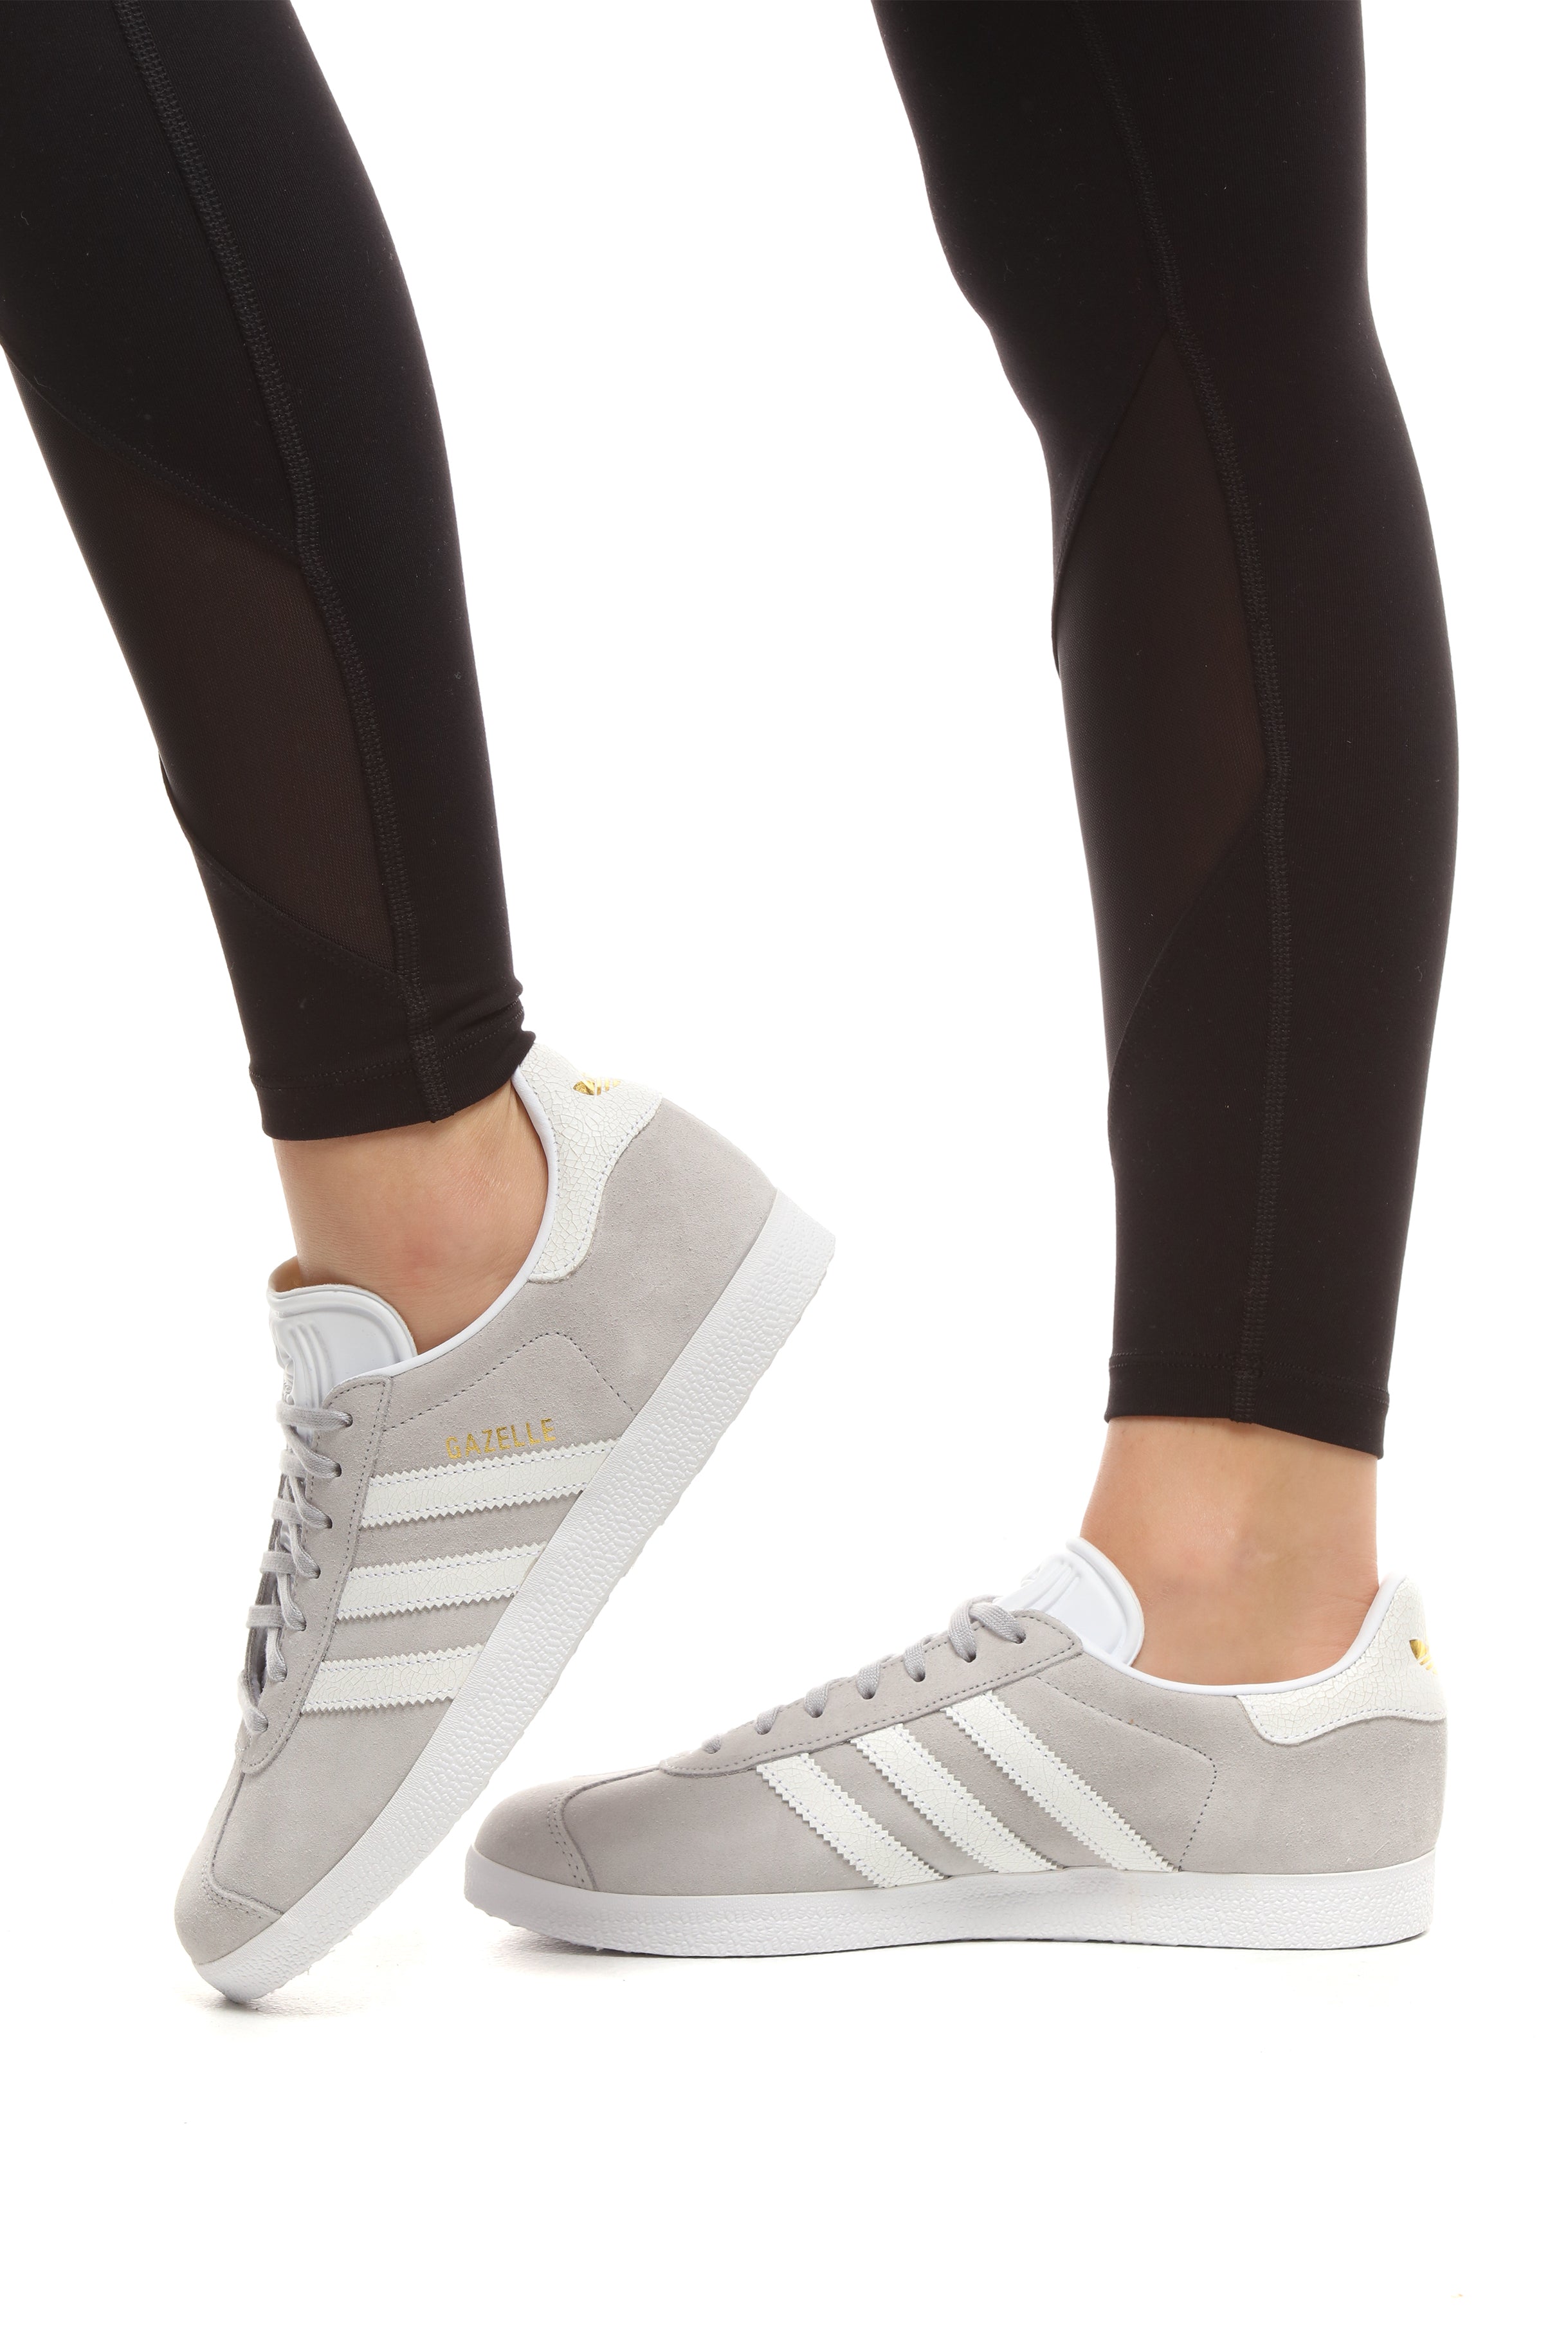 Adidas Women's Gazelle Grey/White | B41659 | Culture Kings US